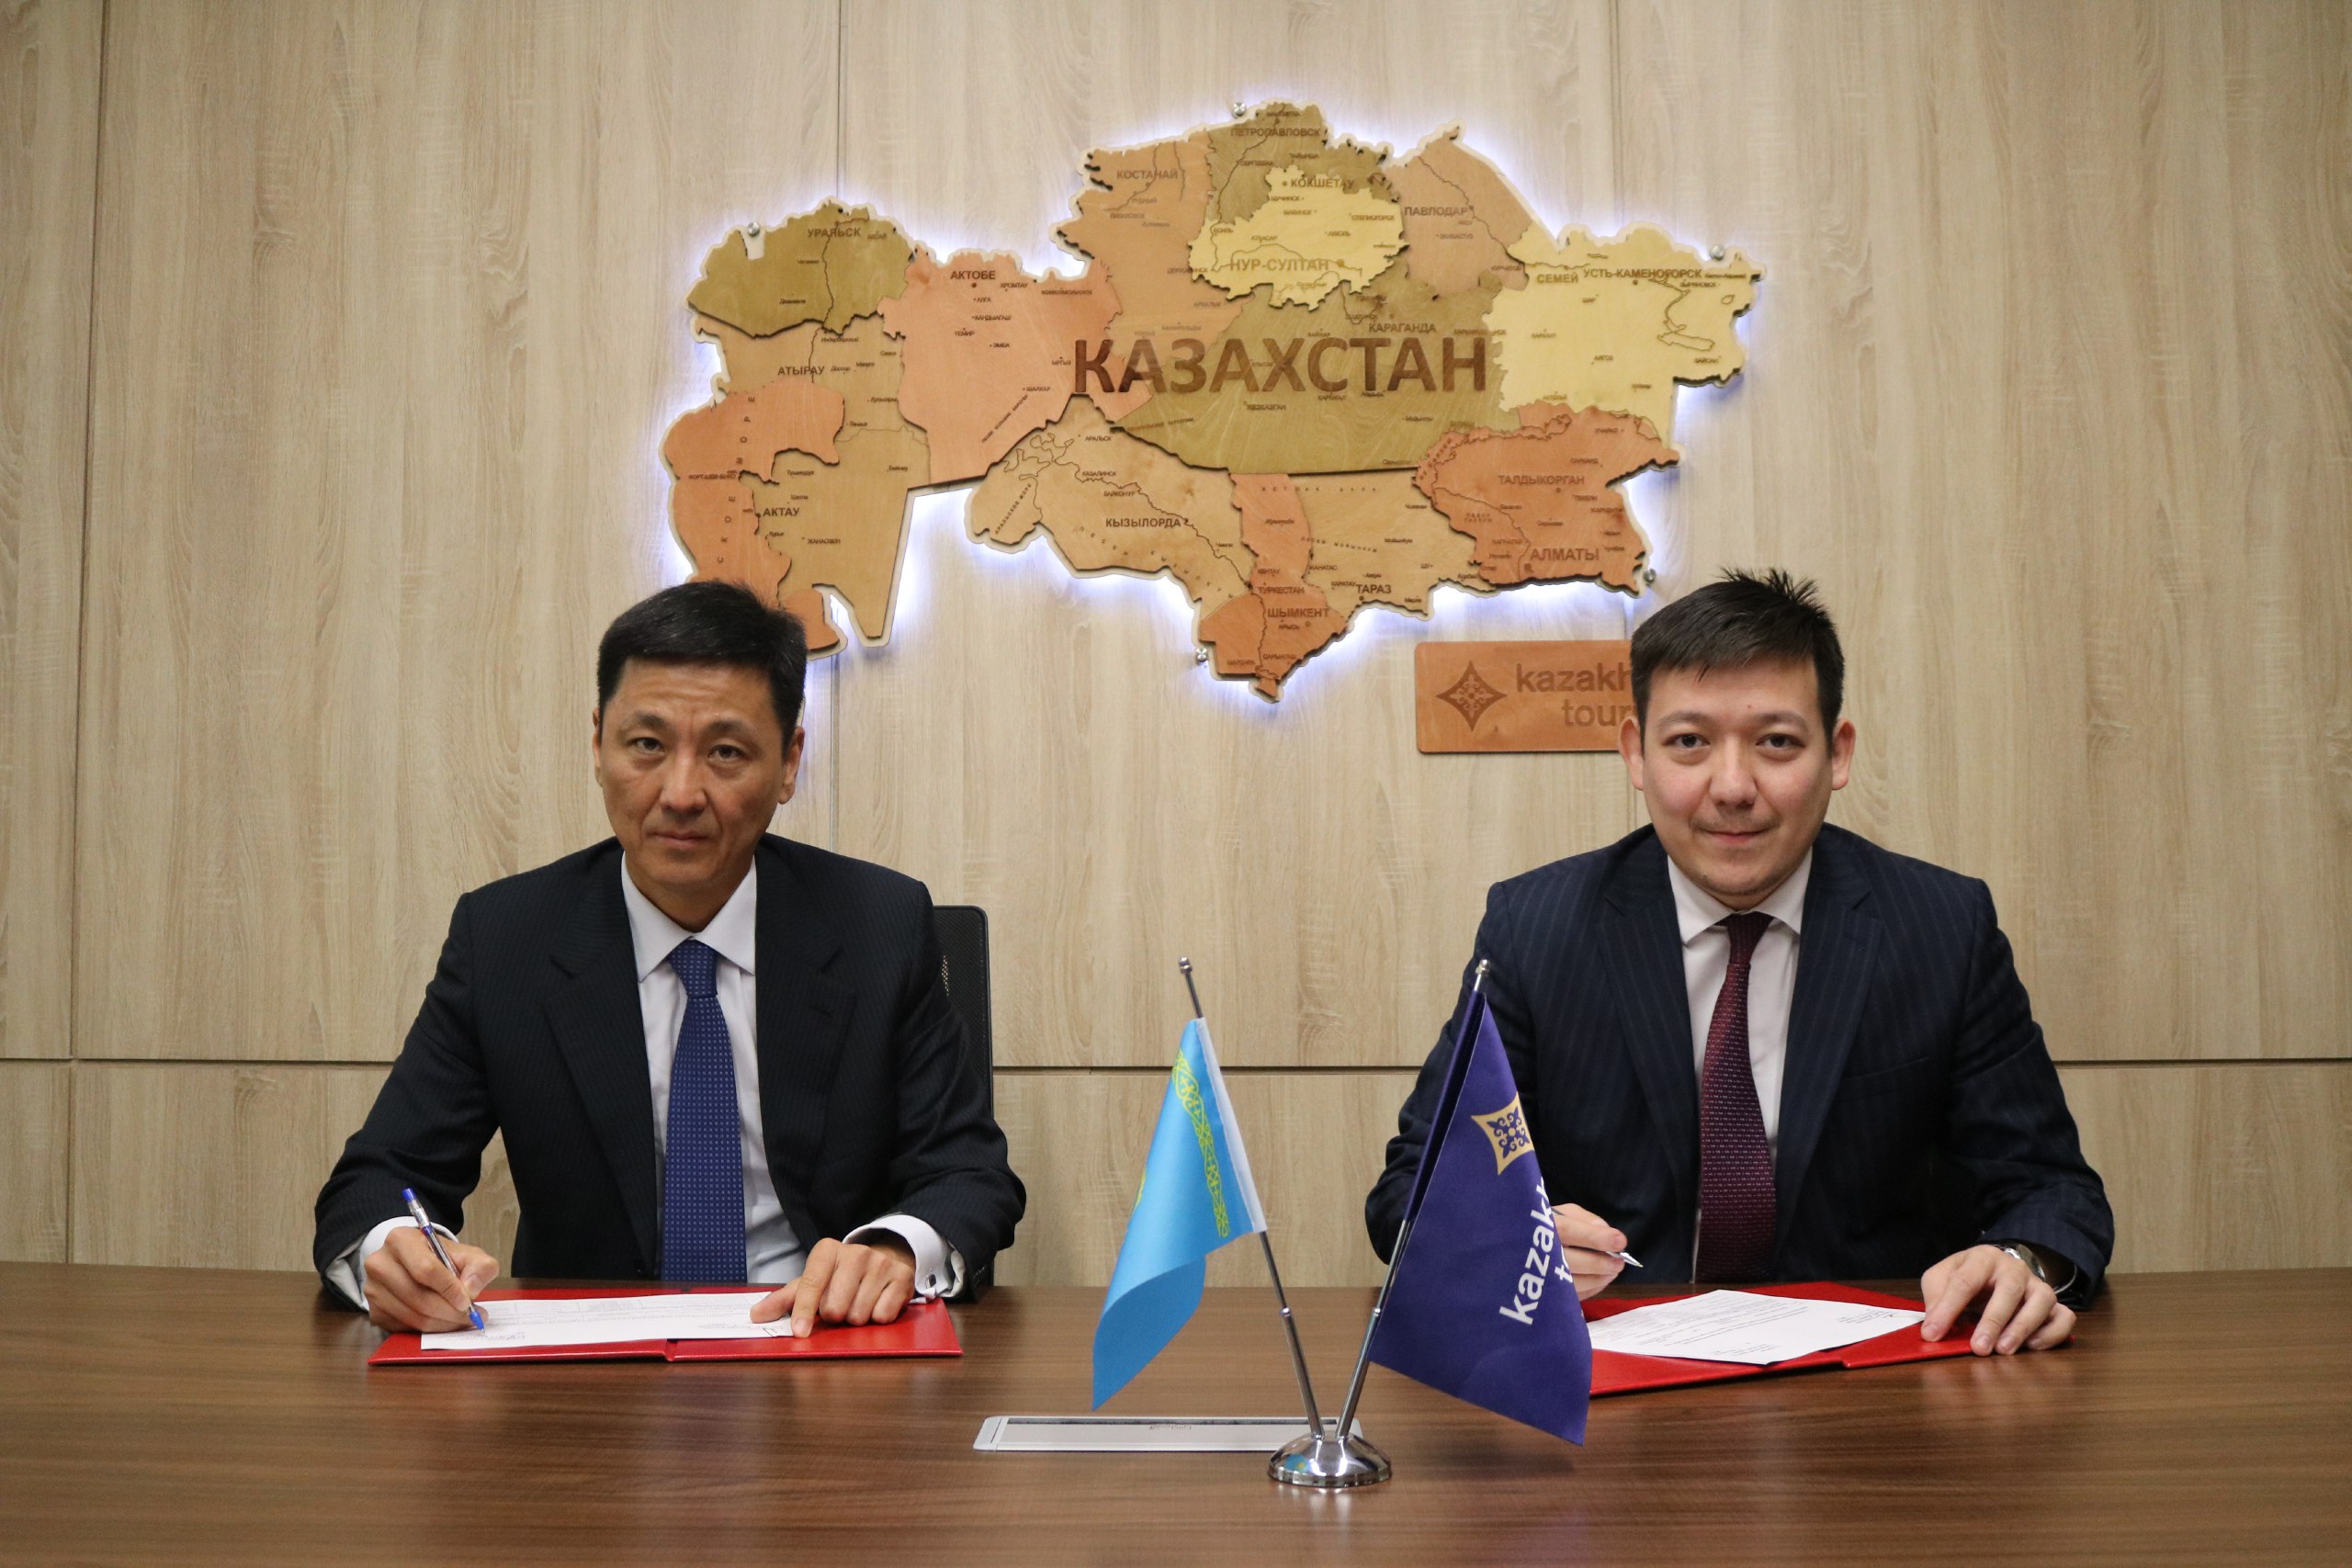 Kazakh Tourism подписал совместный план с КазСтандарт